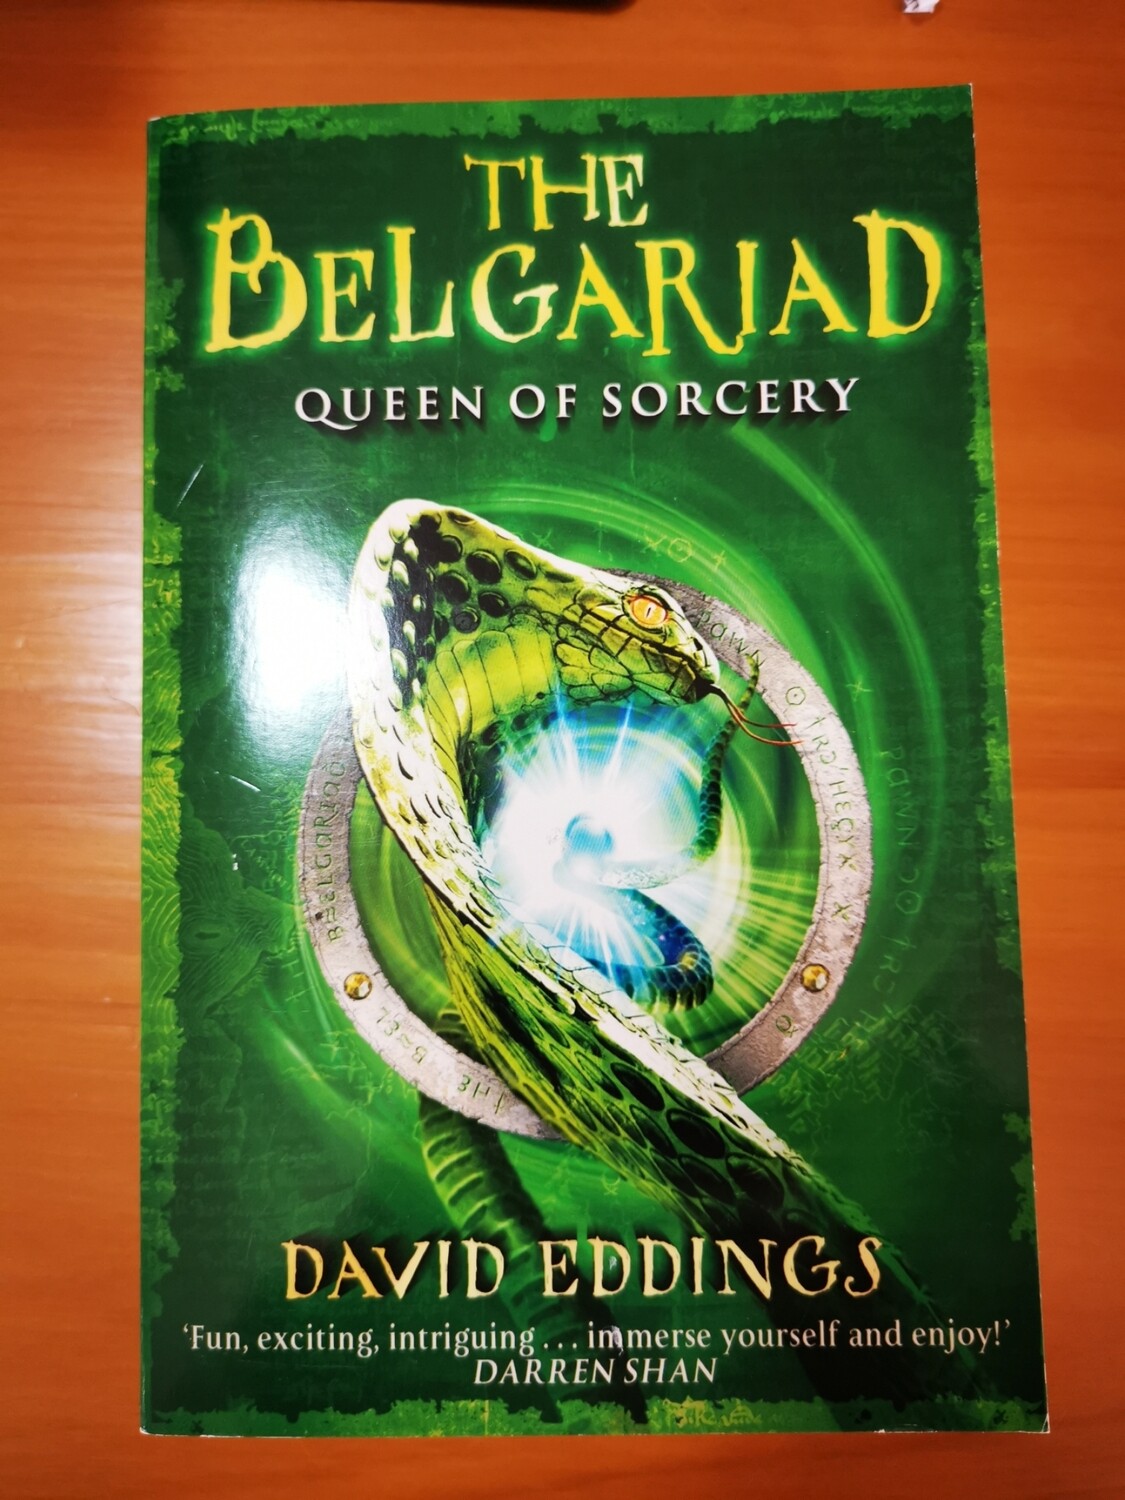 The Begariad queen of Sorcery, David Eddings